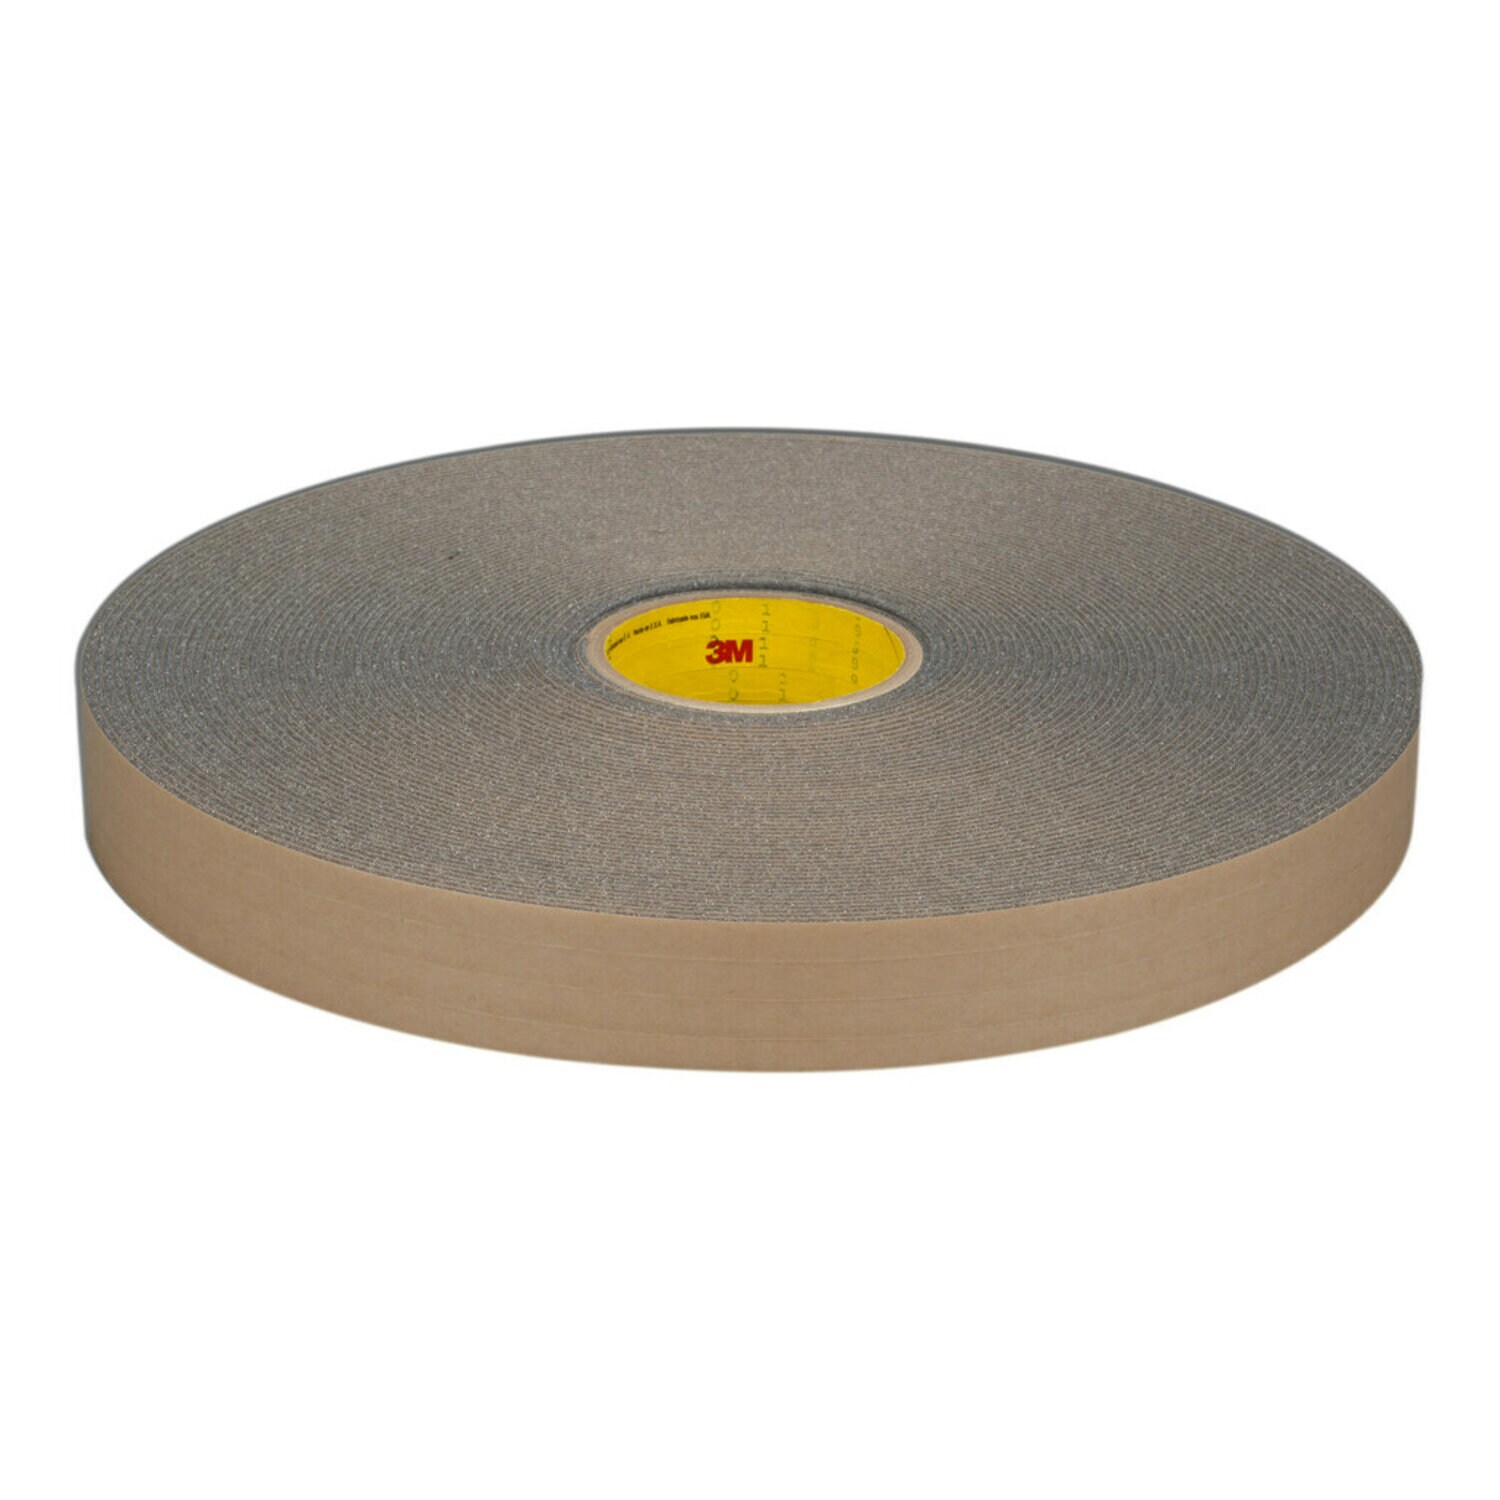 7100097928 - 3M Urethane Foam Tape 4318, Charcoal Gray, 1/4 in x 36 yd, 125 mil, 36
rolls per case